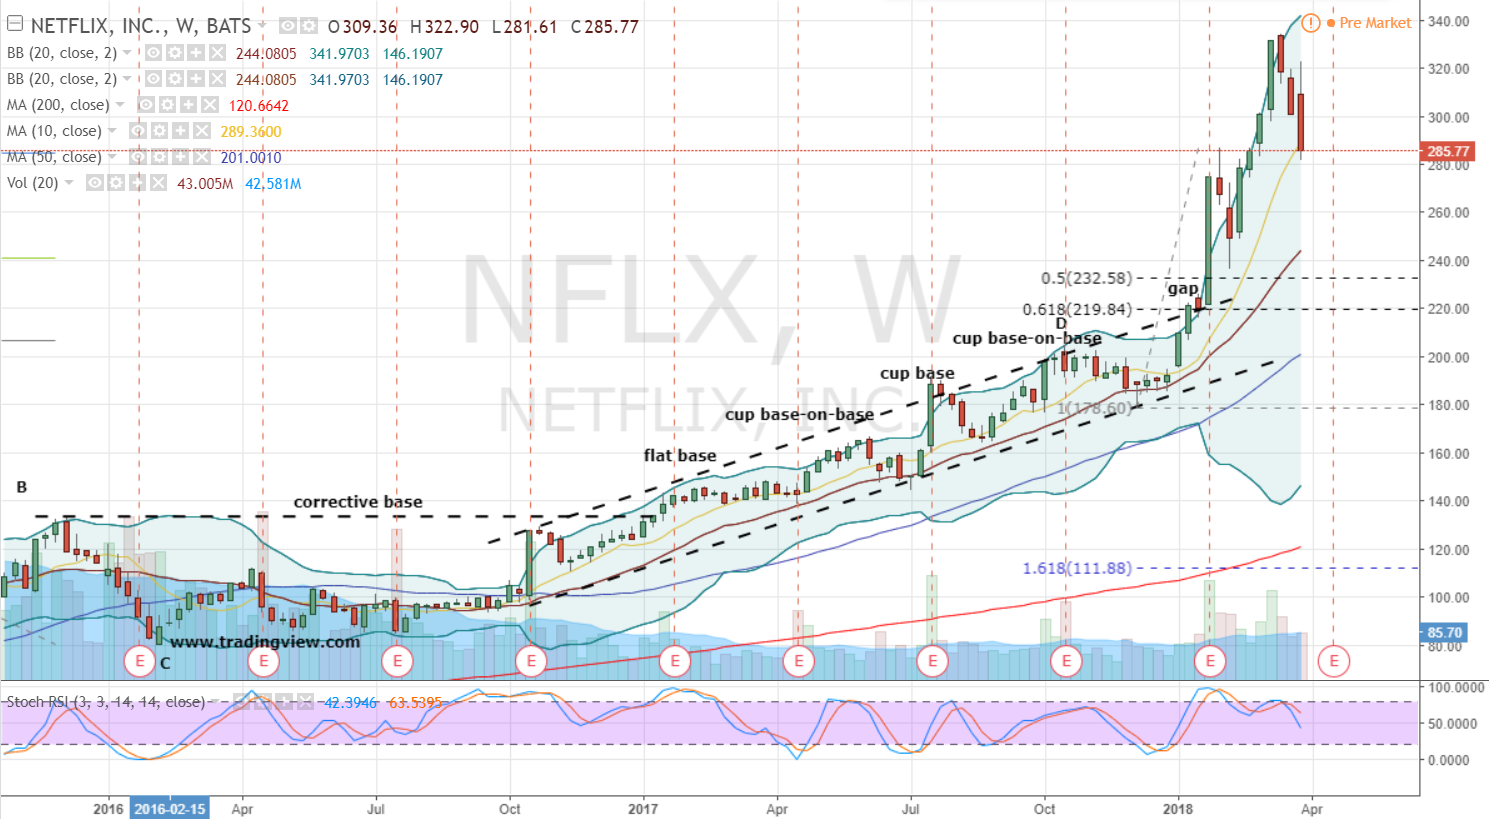 i want to buy netflix stock